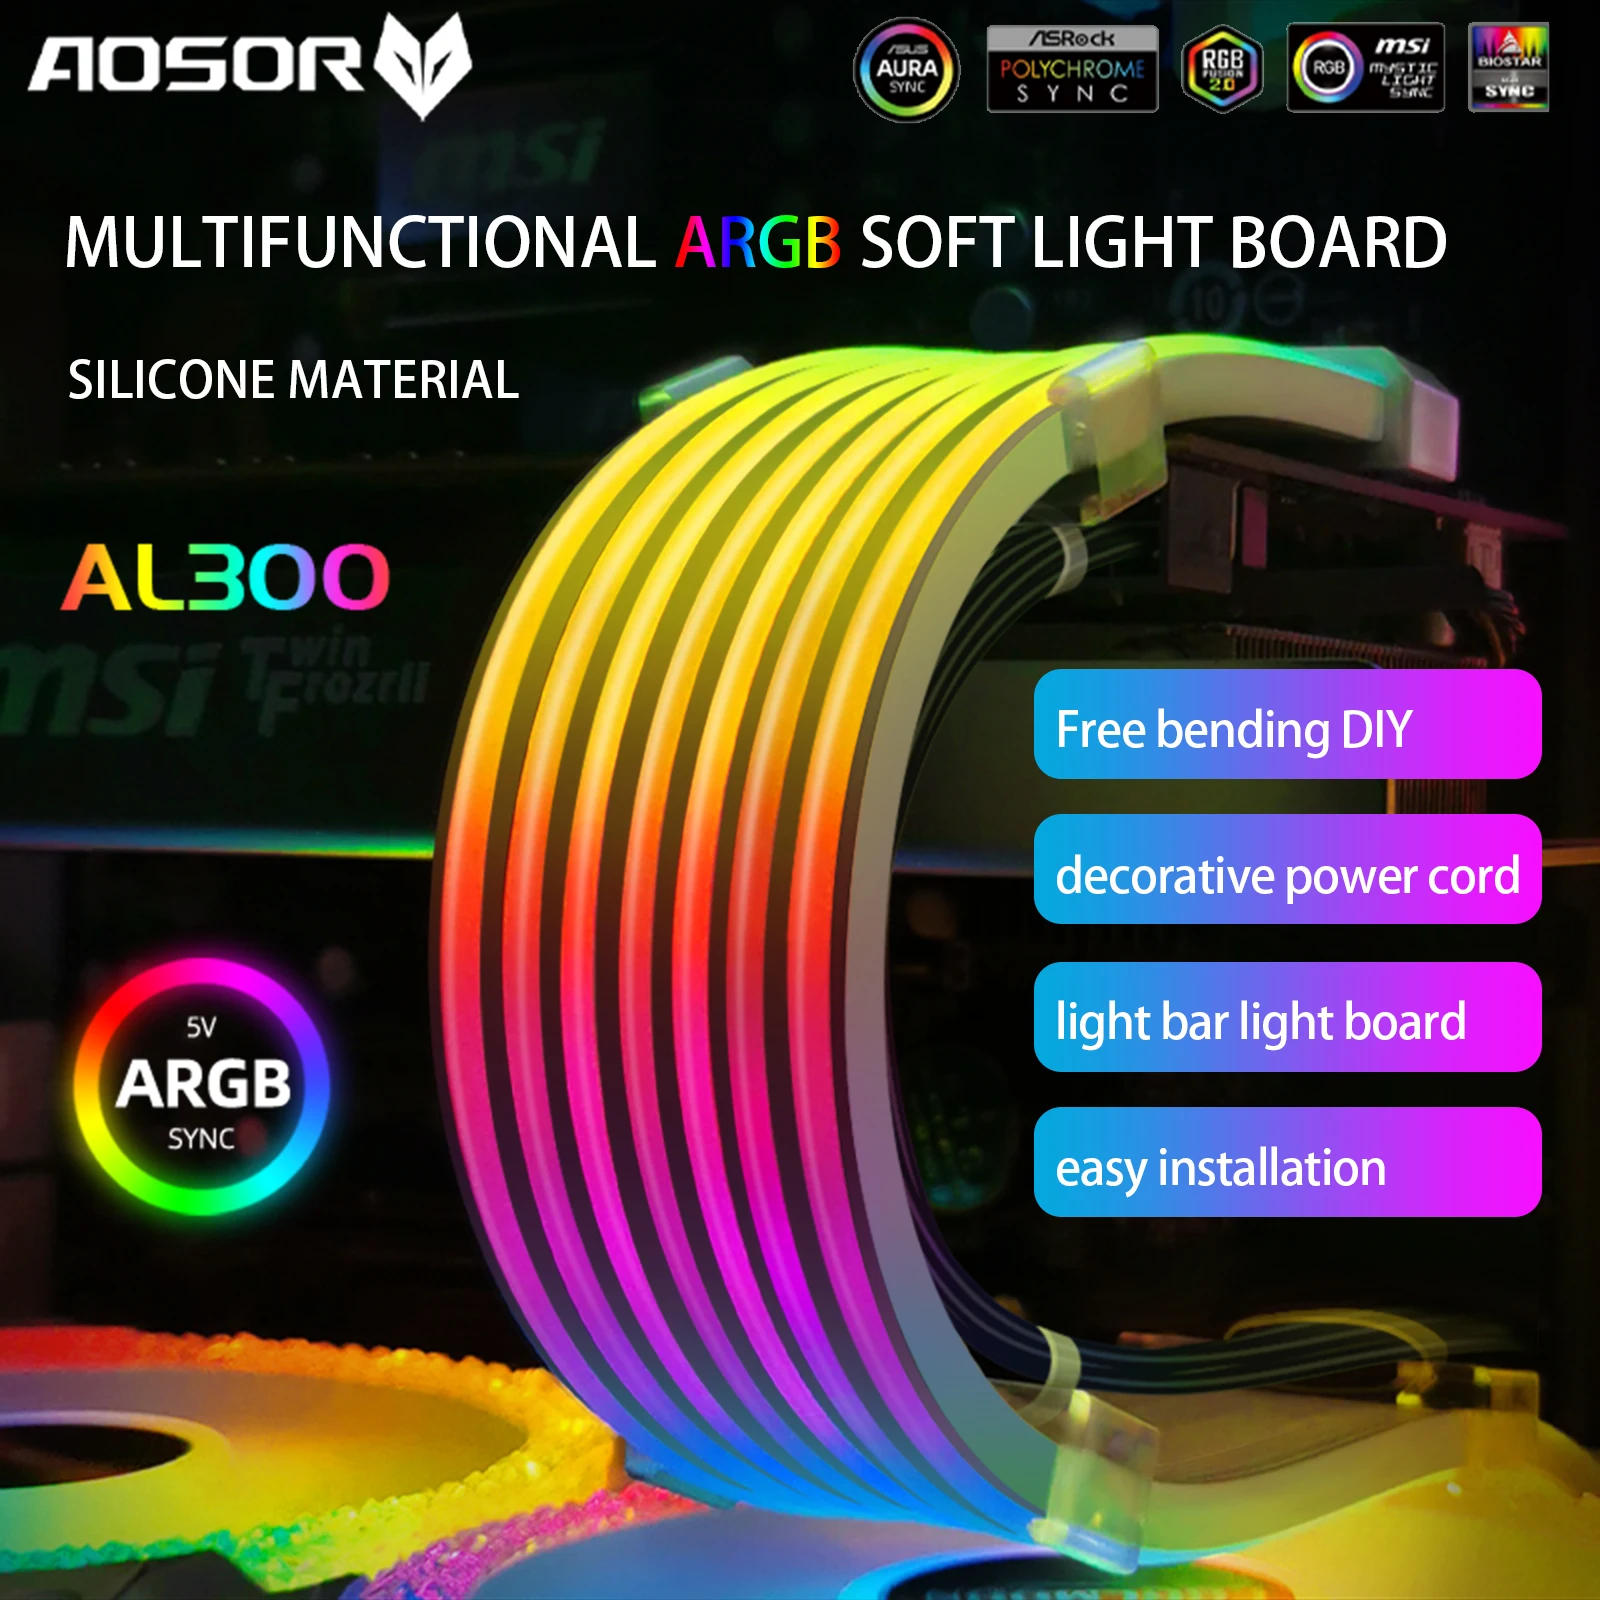 

COOLMOON AOSOR Lamp Tape PC Backlight Flexible Mounting Light 5V ARGB Aura Sync Flexible Light Bar Bendable for 8P Graphics Card